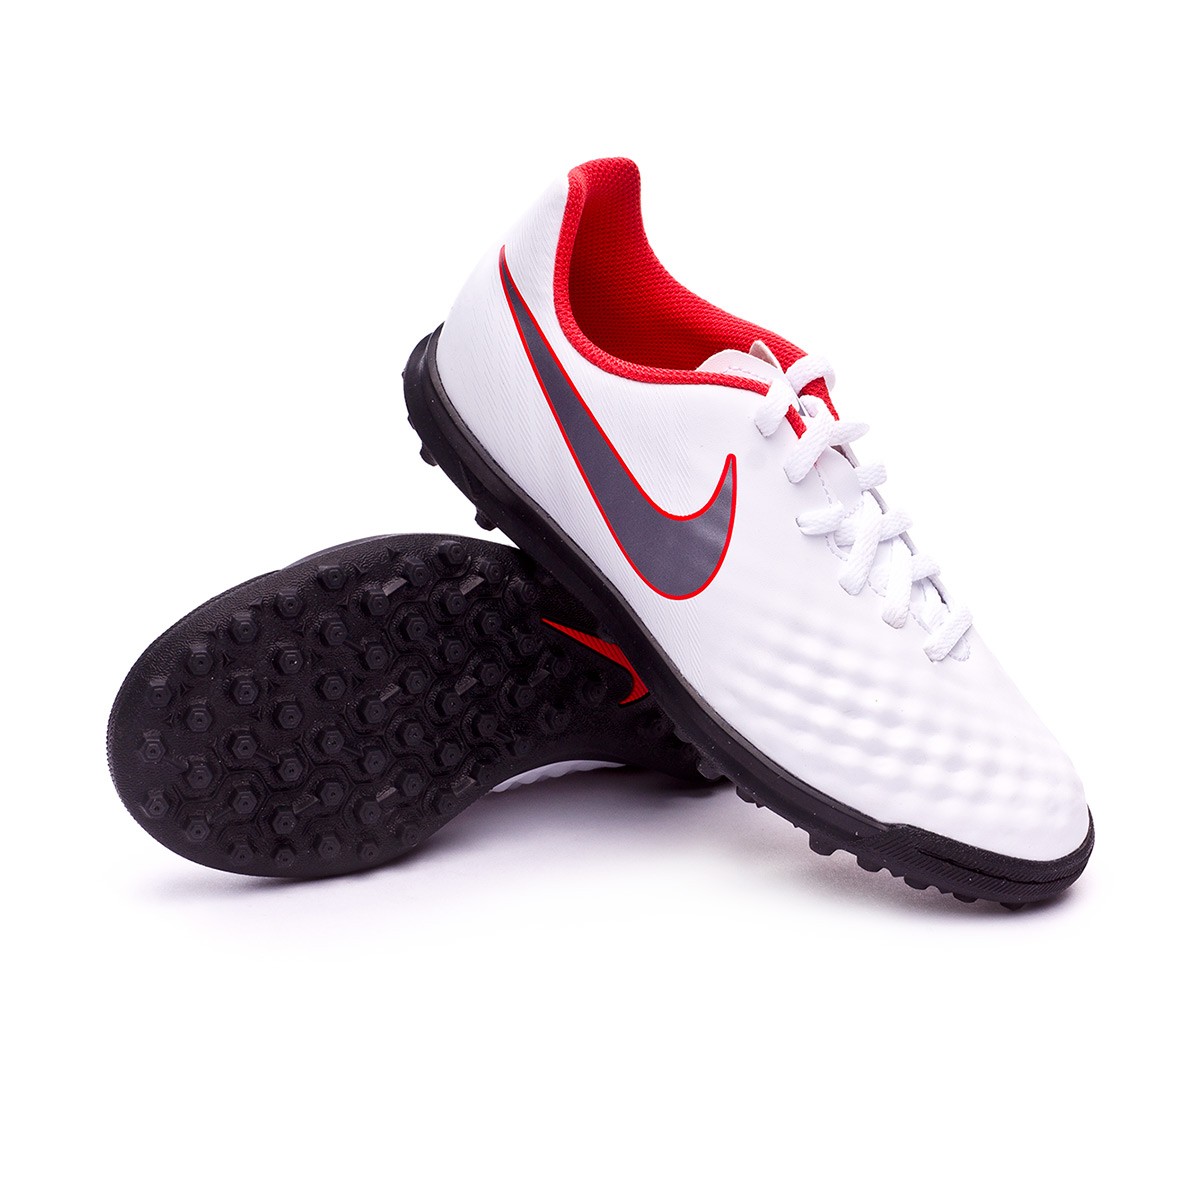 Nike Magista Obra II FG Soccer Cleats Men's Size US 9.5